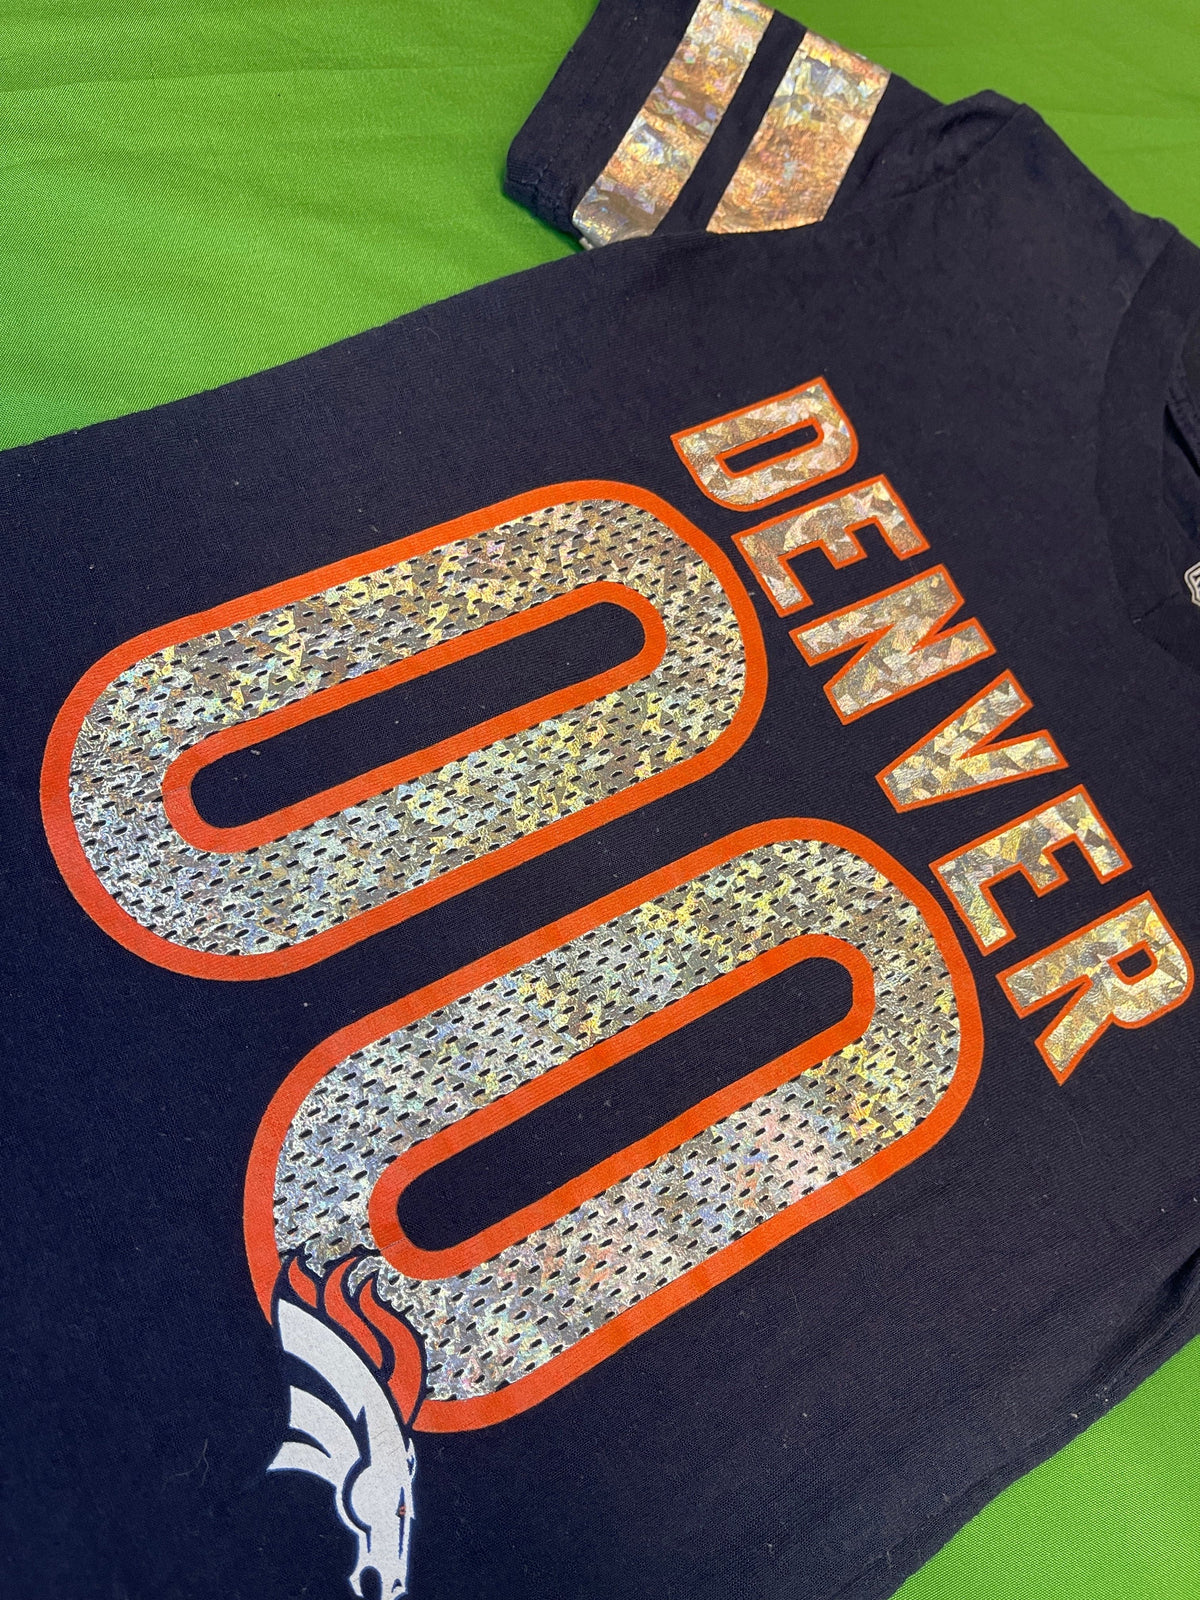 NFL Denver Broncos Navy Glitter Girls T-Shirt Youth Small 6-7